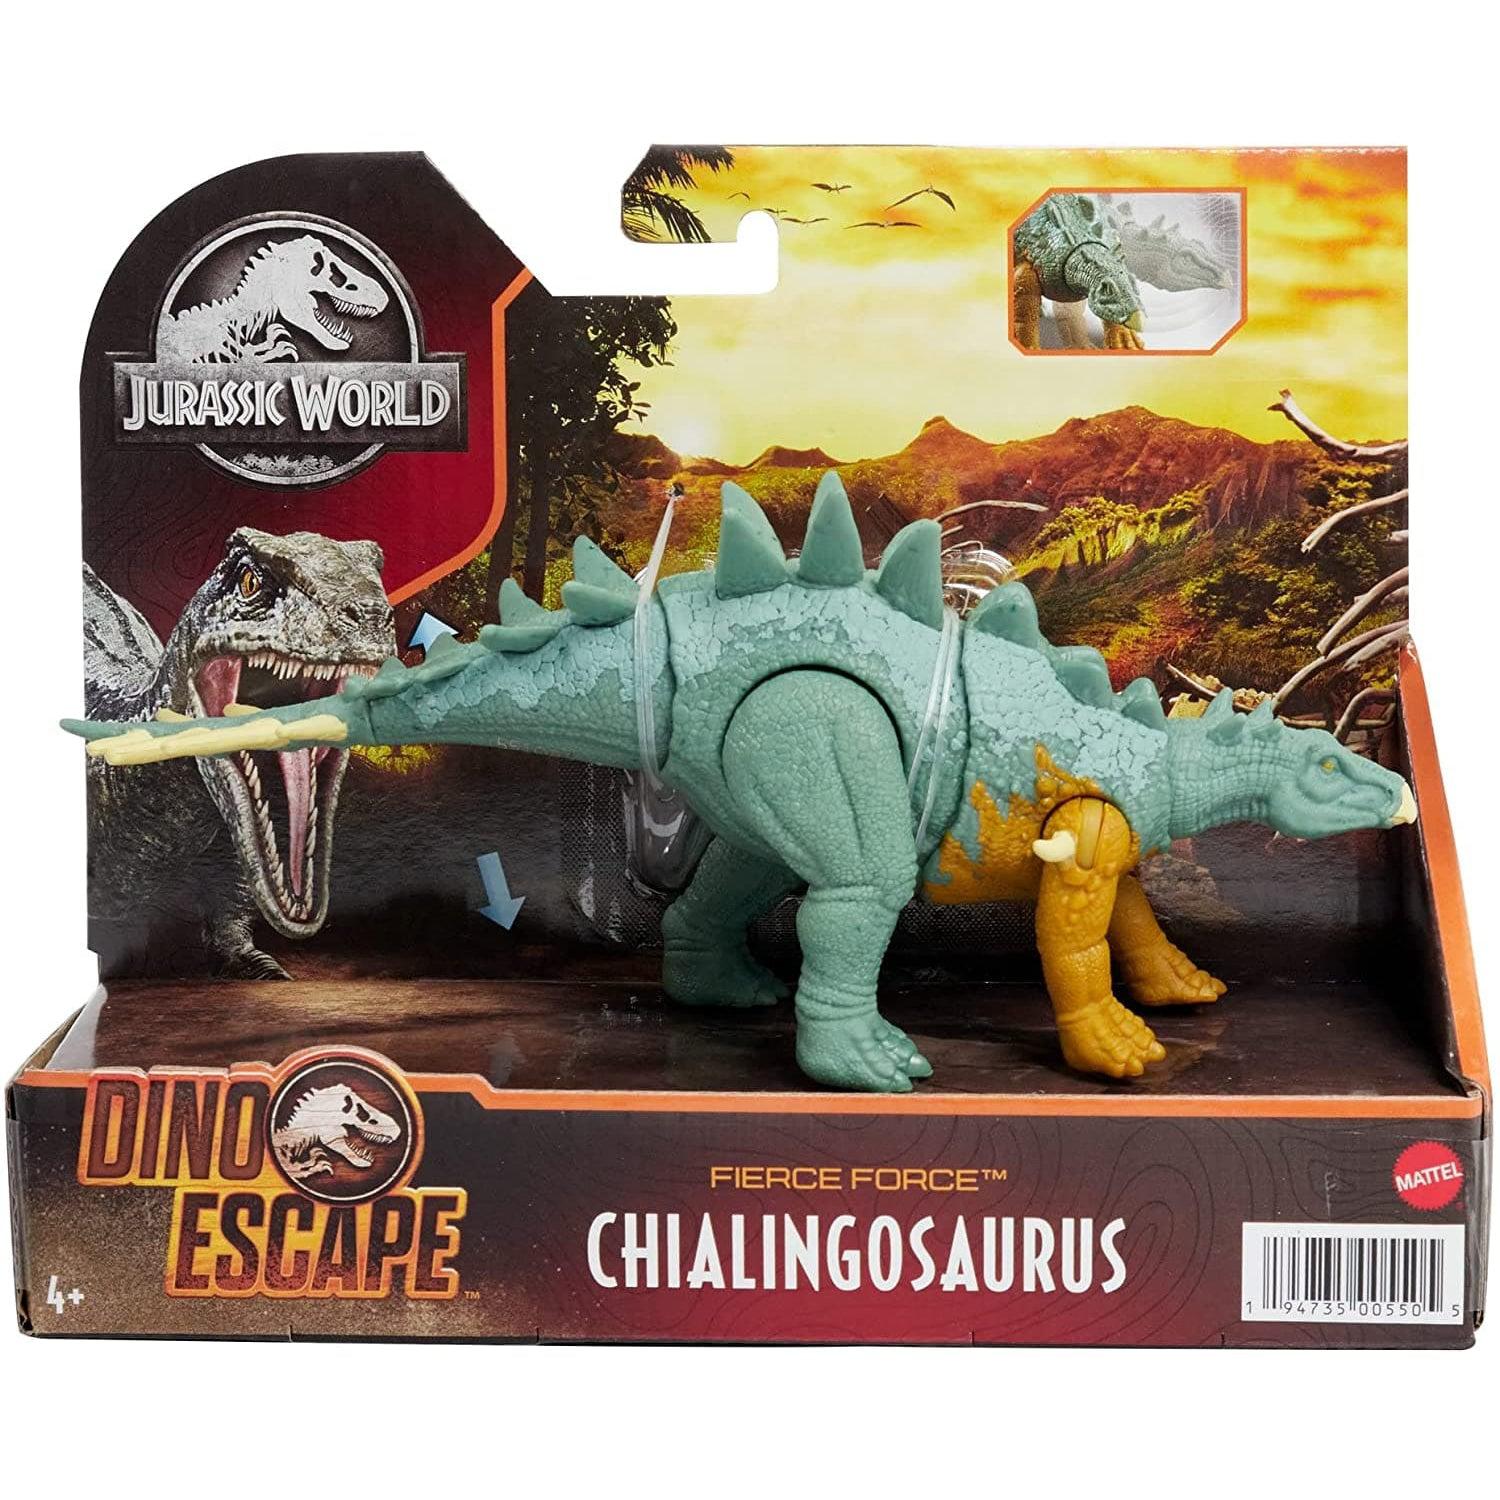 Fisher Price-Jurassic World Fierce Force Assortment-HBY69-Chialingosaurus-Legacy Toys